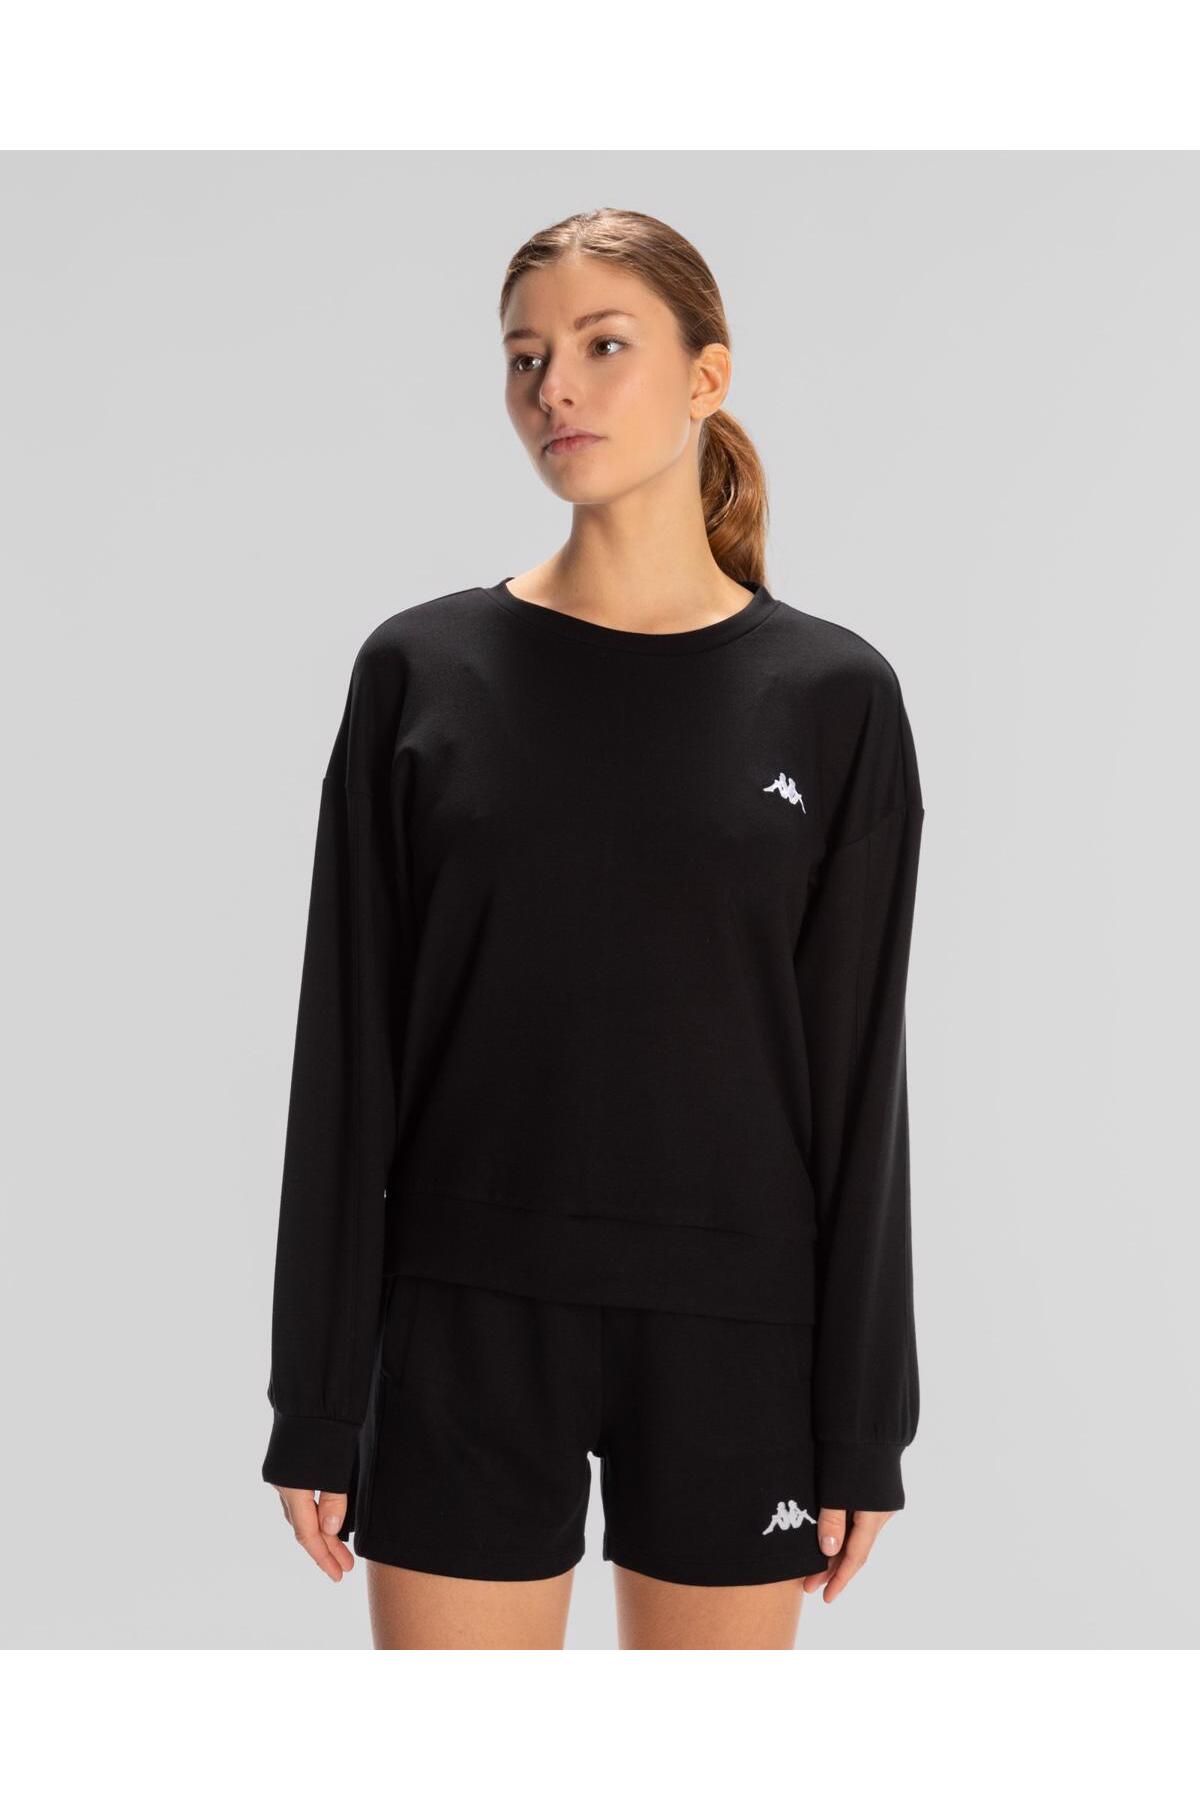 Kappa Authentic Sylia Sweatshirt Kadın Siyah Regular Fit Sweatshirt